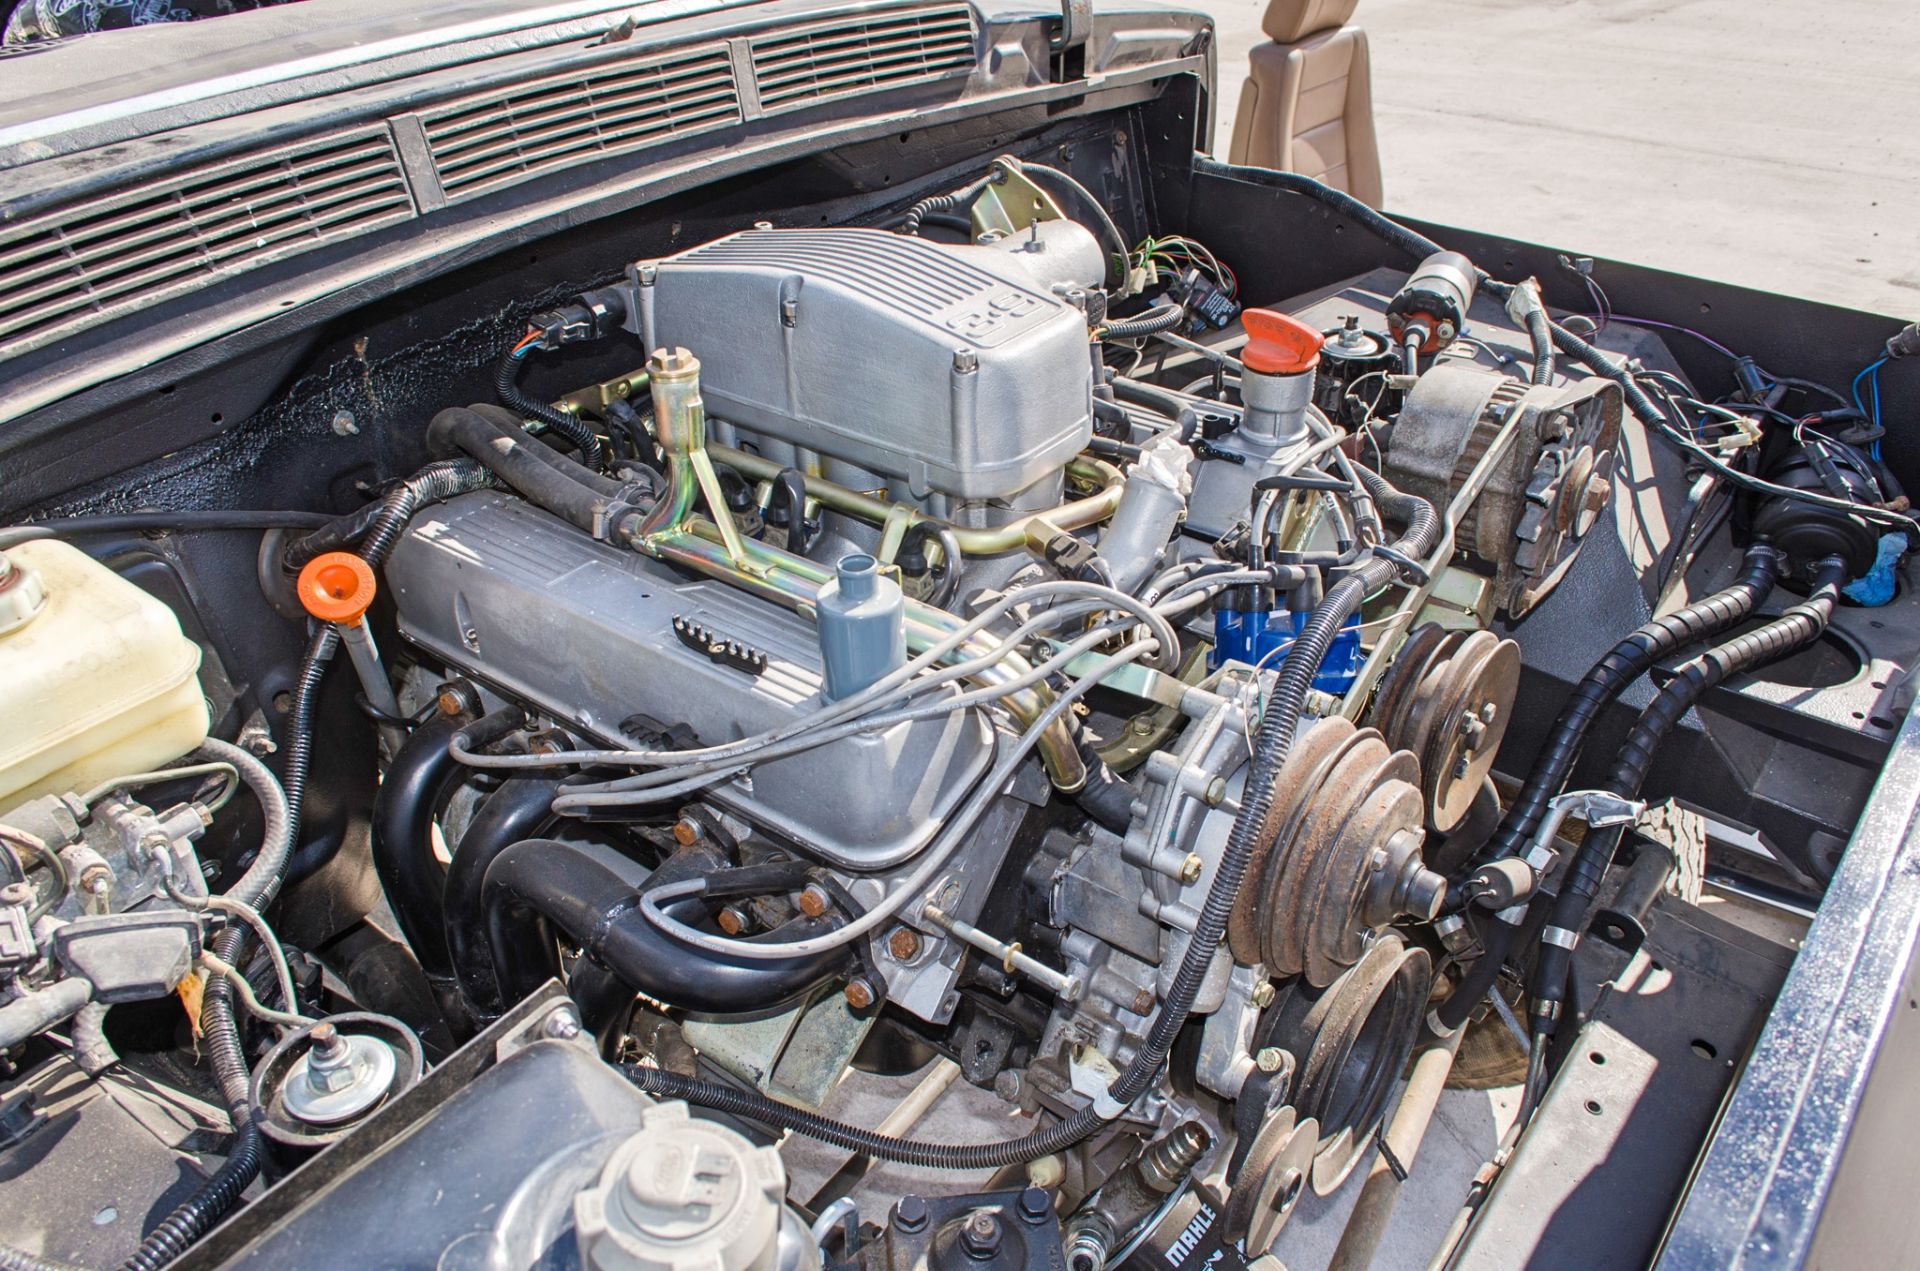 1991 Range Rover CSK 3.9 litre V8 3 door SUV - Image 46 of 60